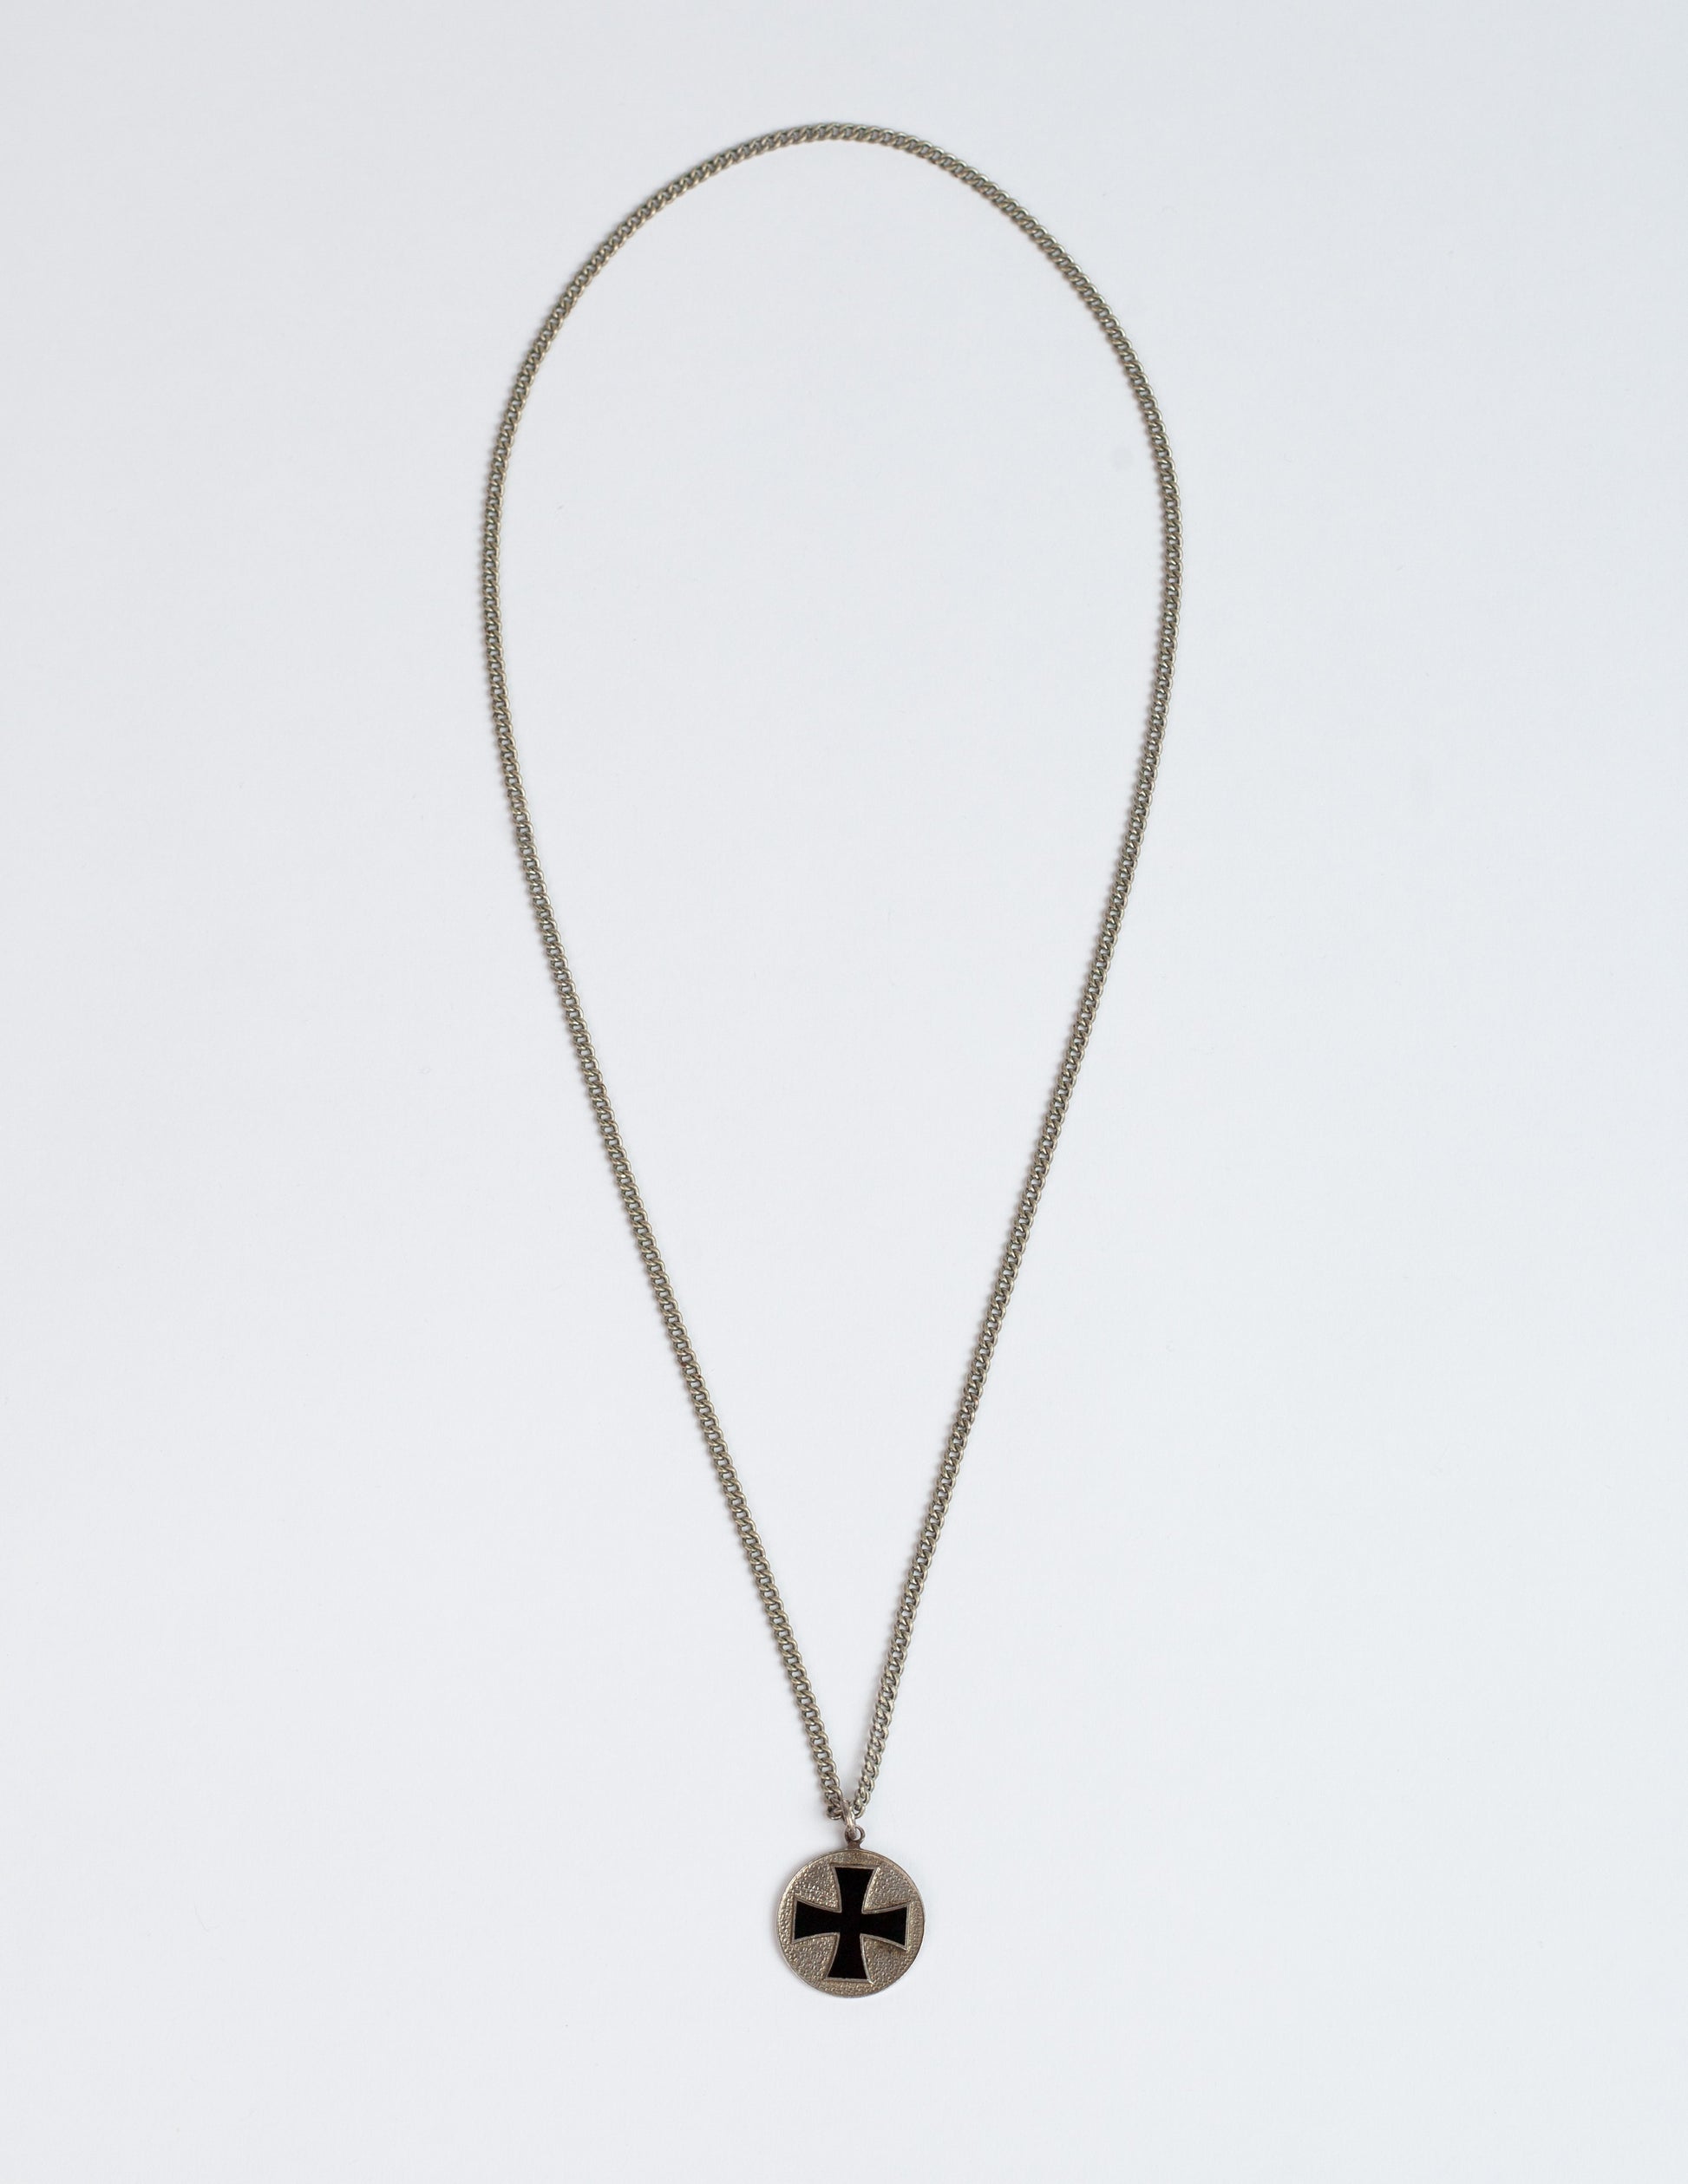 1960's Vintage 1" Sterling Silver Surfer's Cross Necklace